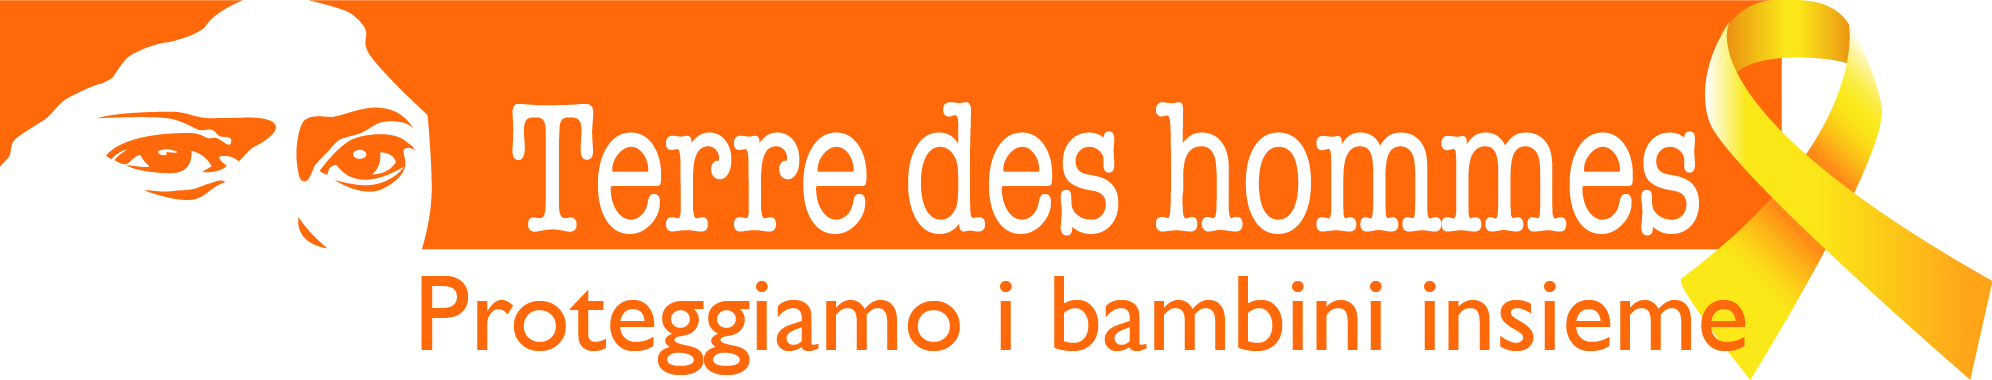 logo_arancio_fiocco